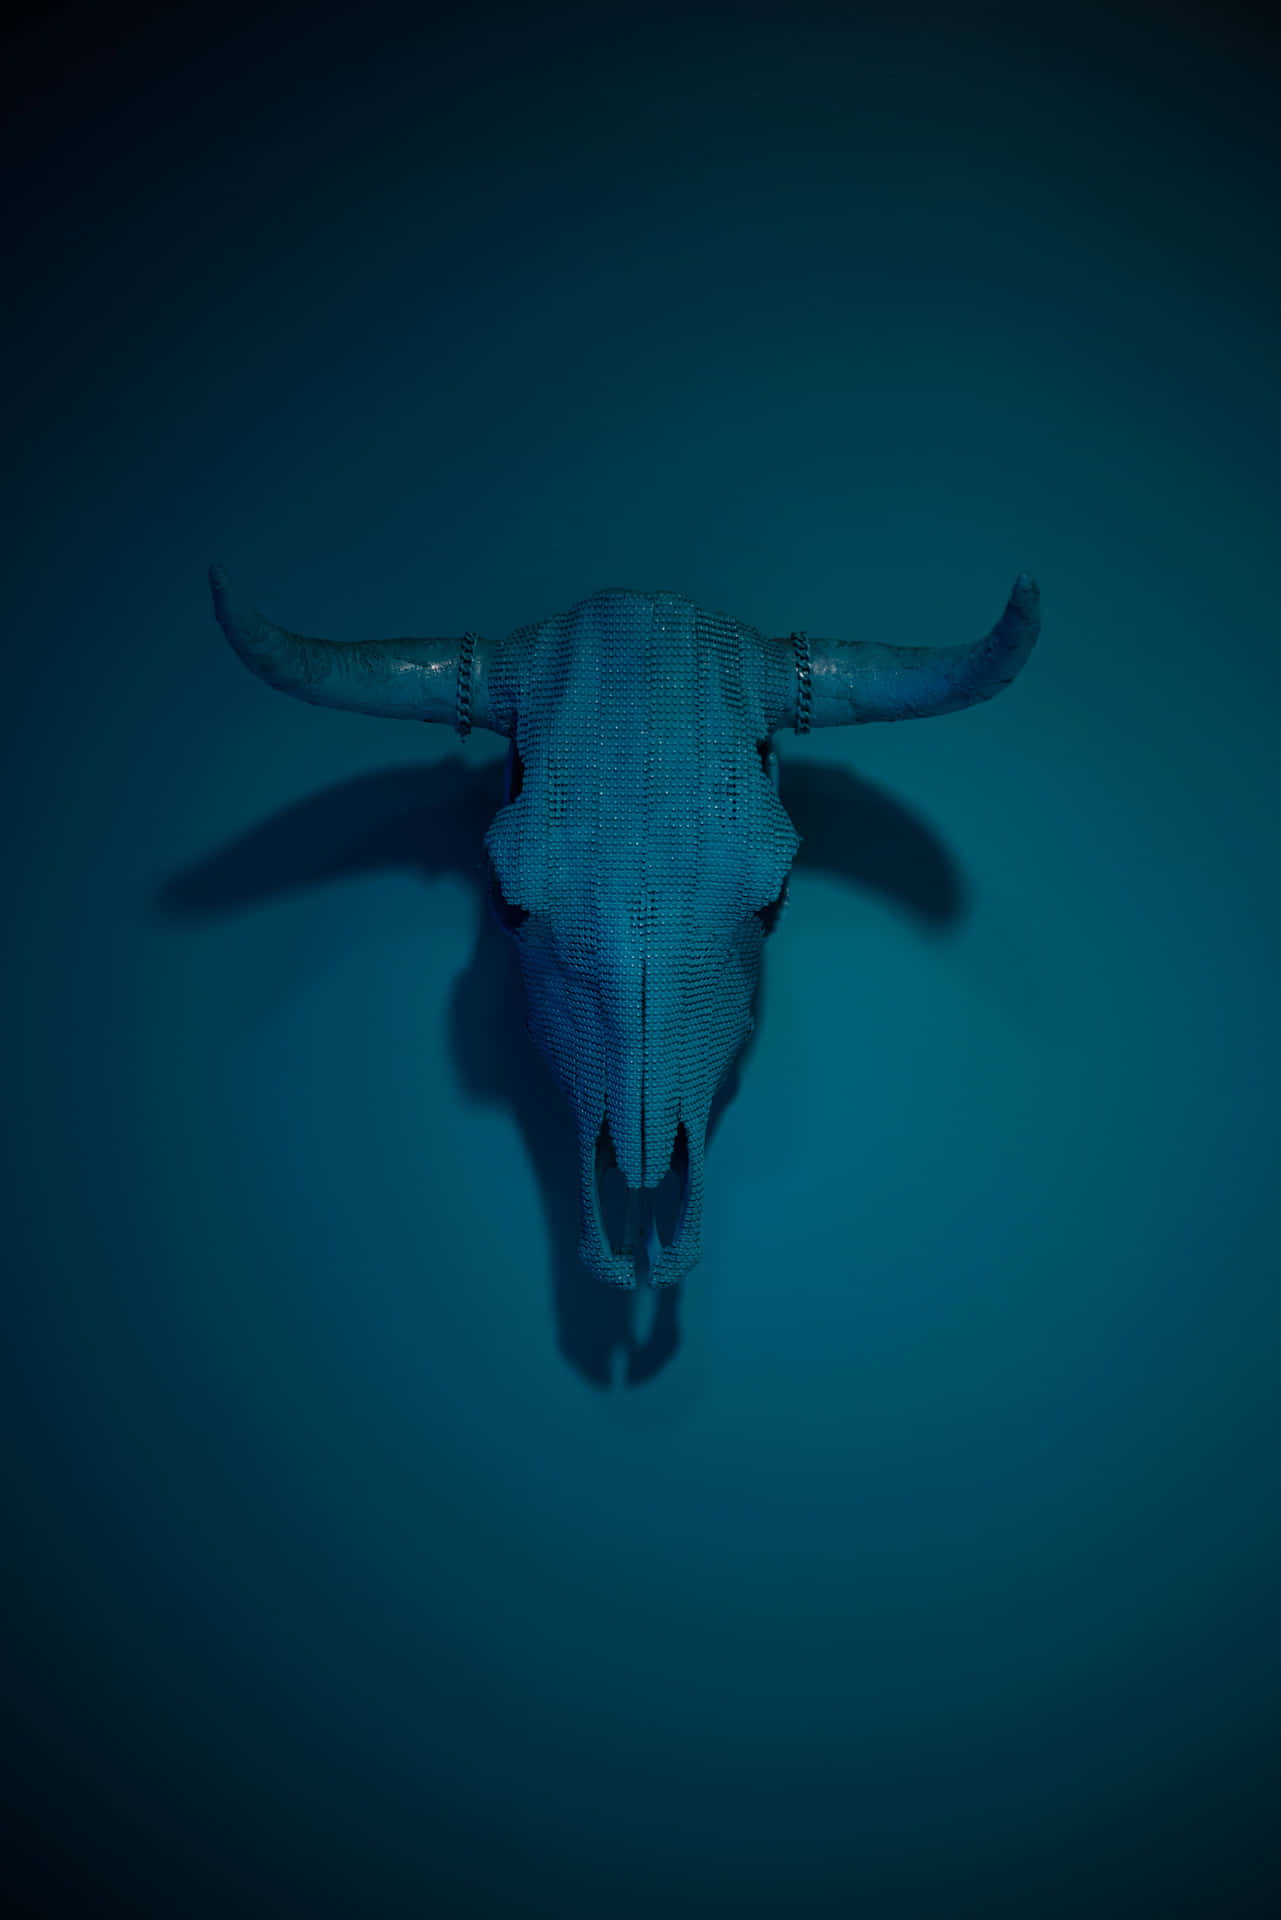 A Bull Skull Against A Blue Sky Wallpaper